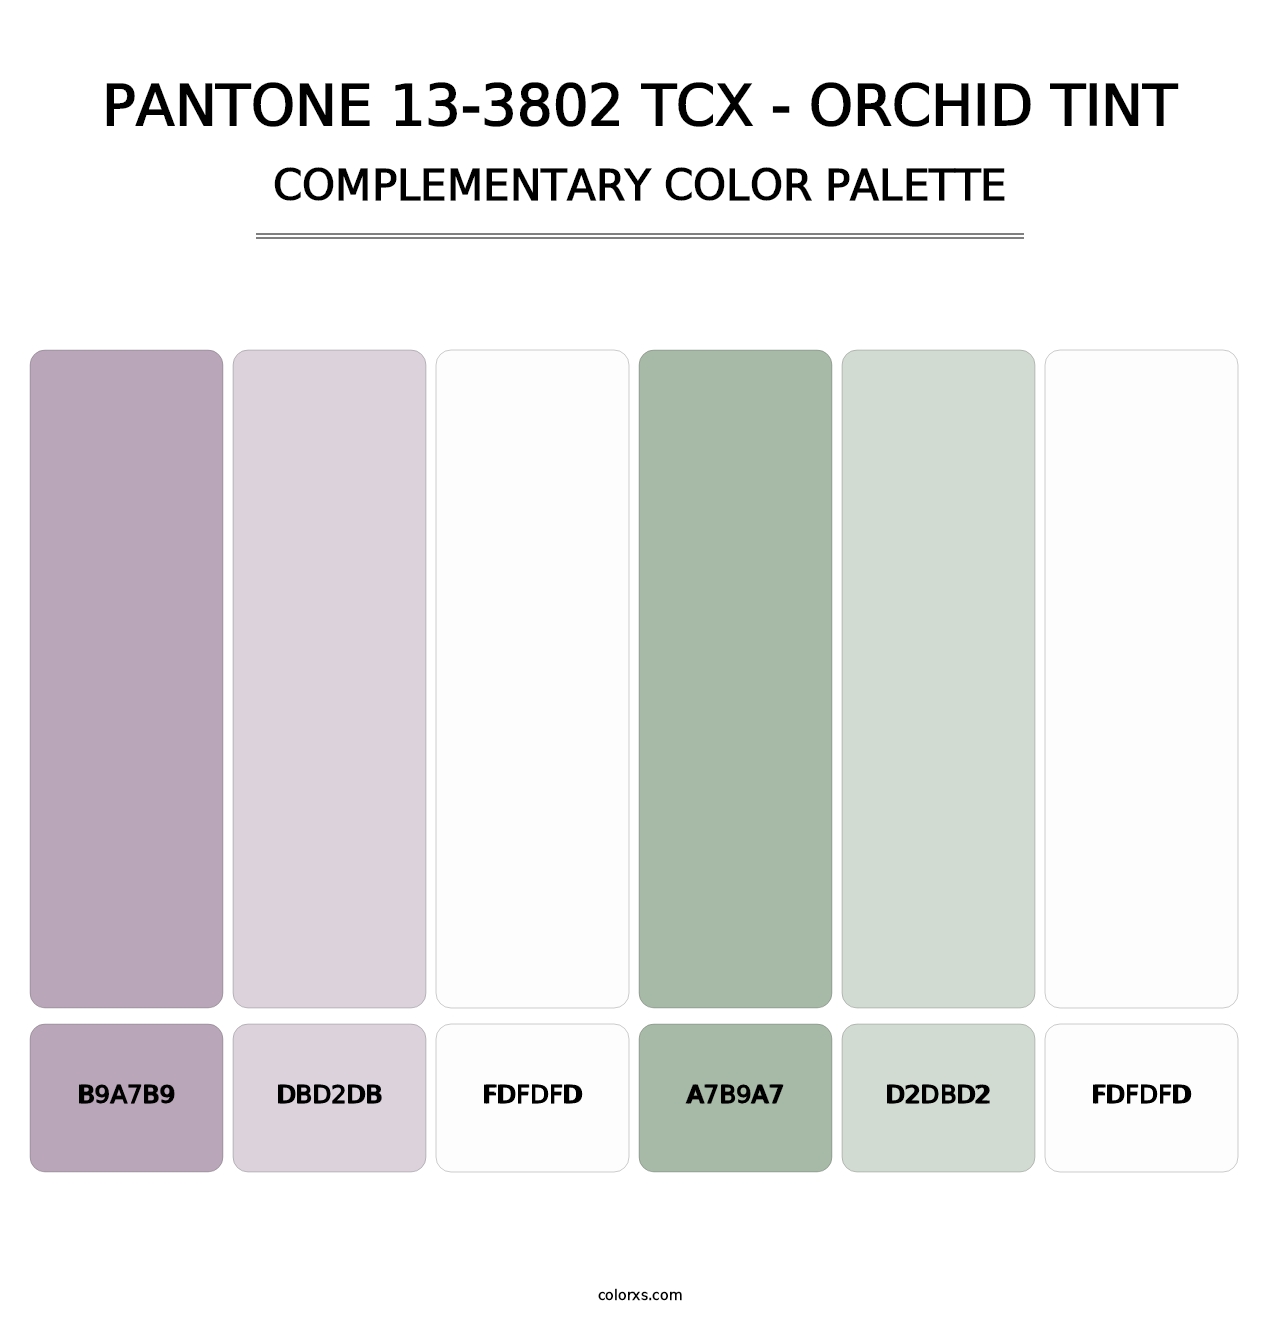 PANTONE 13-3802 TCX - Orchid Tint - Complementary Color Palette